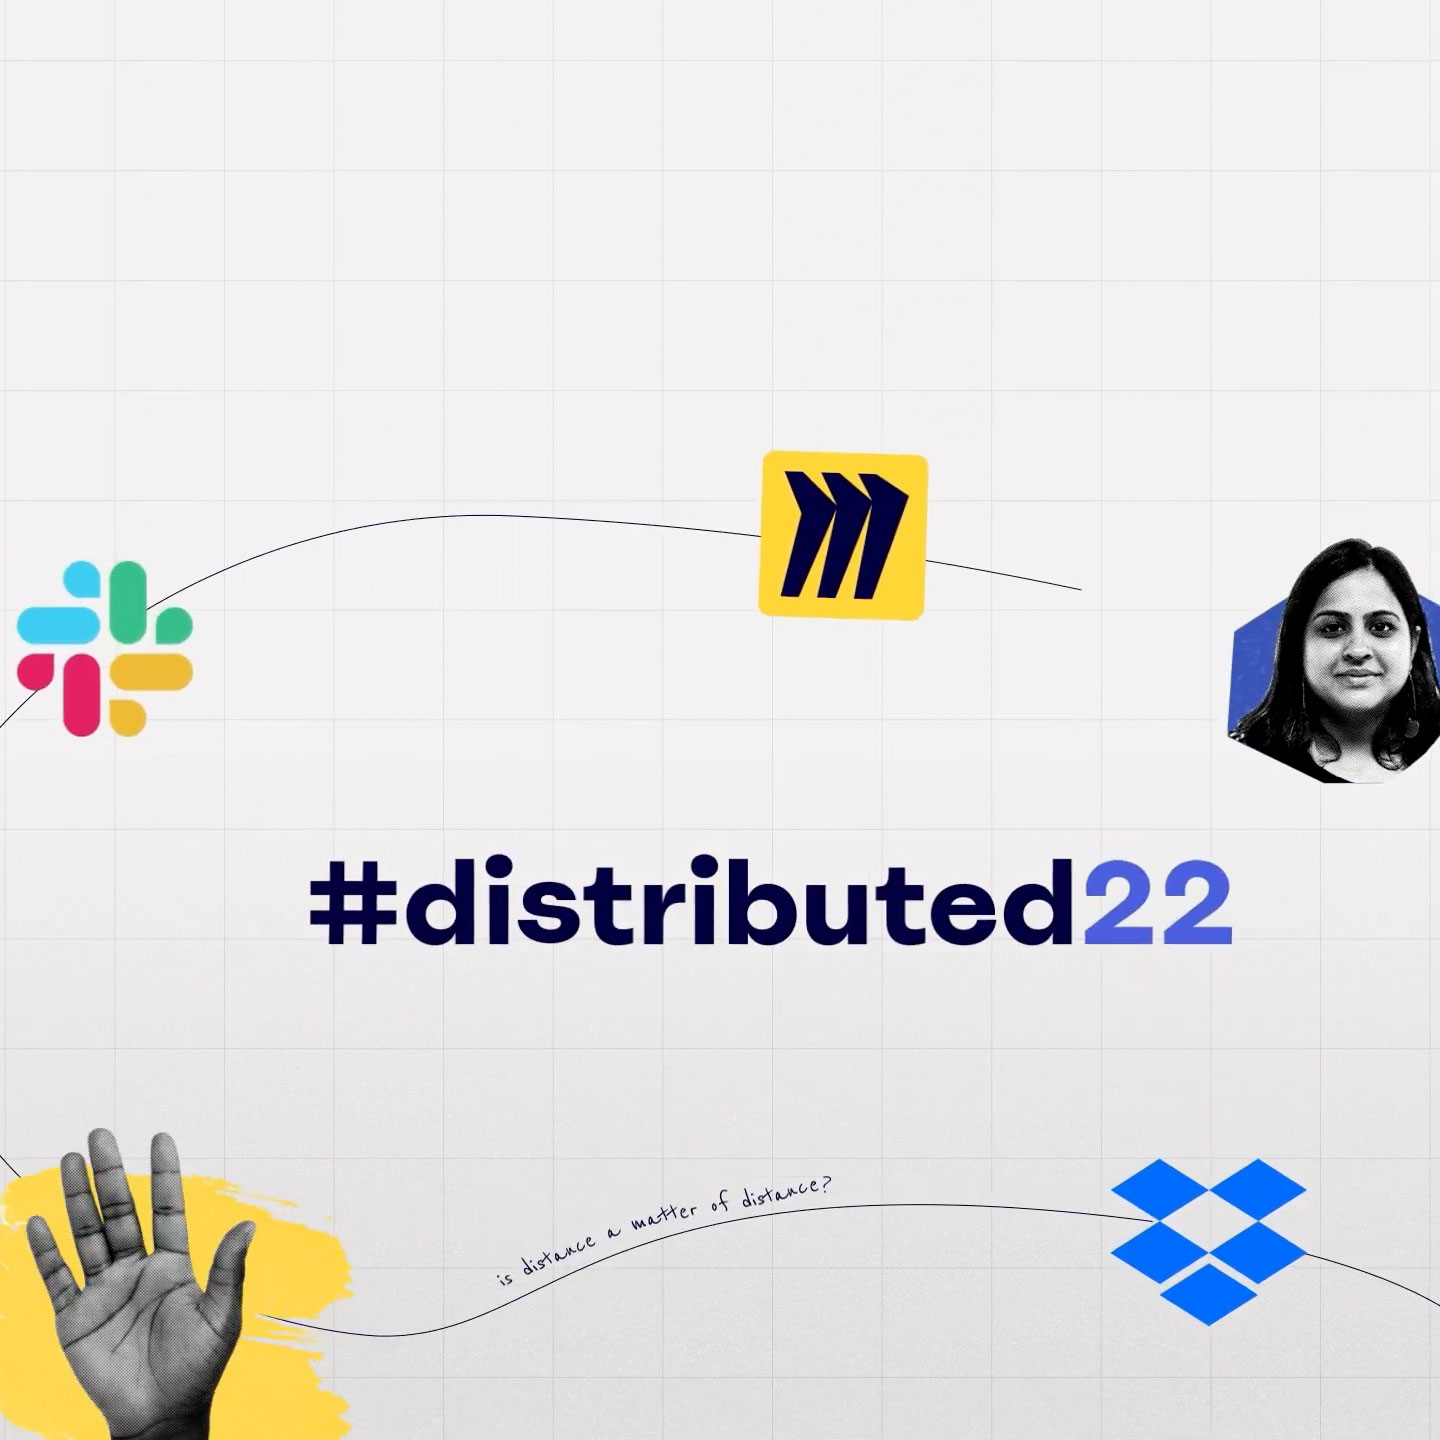 Titelkort fra eventet #distributed22 med Miro-, Slack- og Dropbox-logo